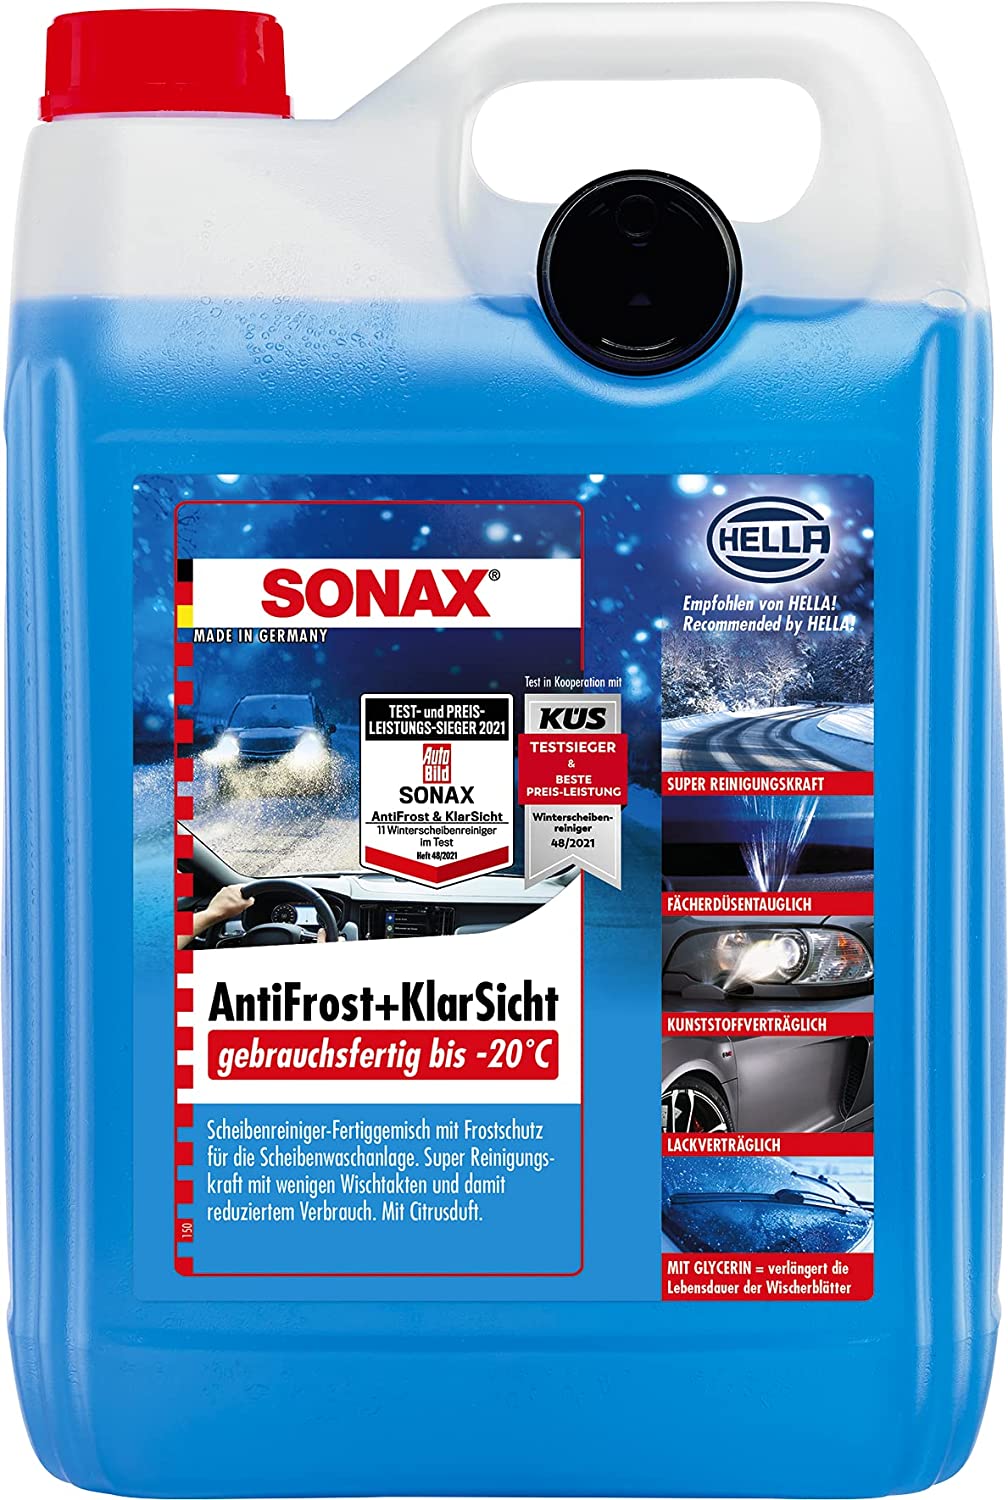 Sonax 03329050 AntiFrost & KlarSicht CLASSIC Citrusduft